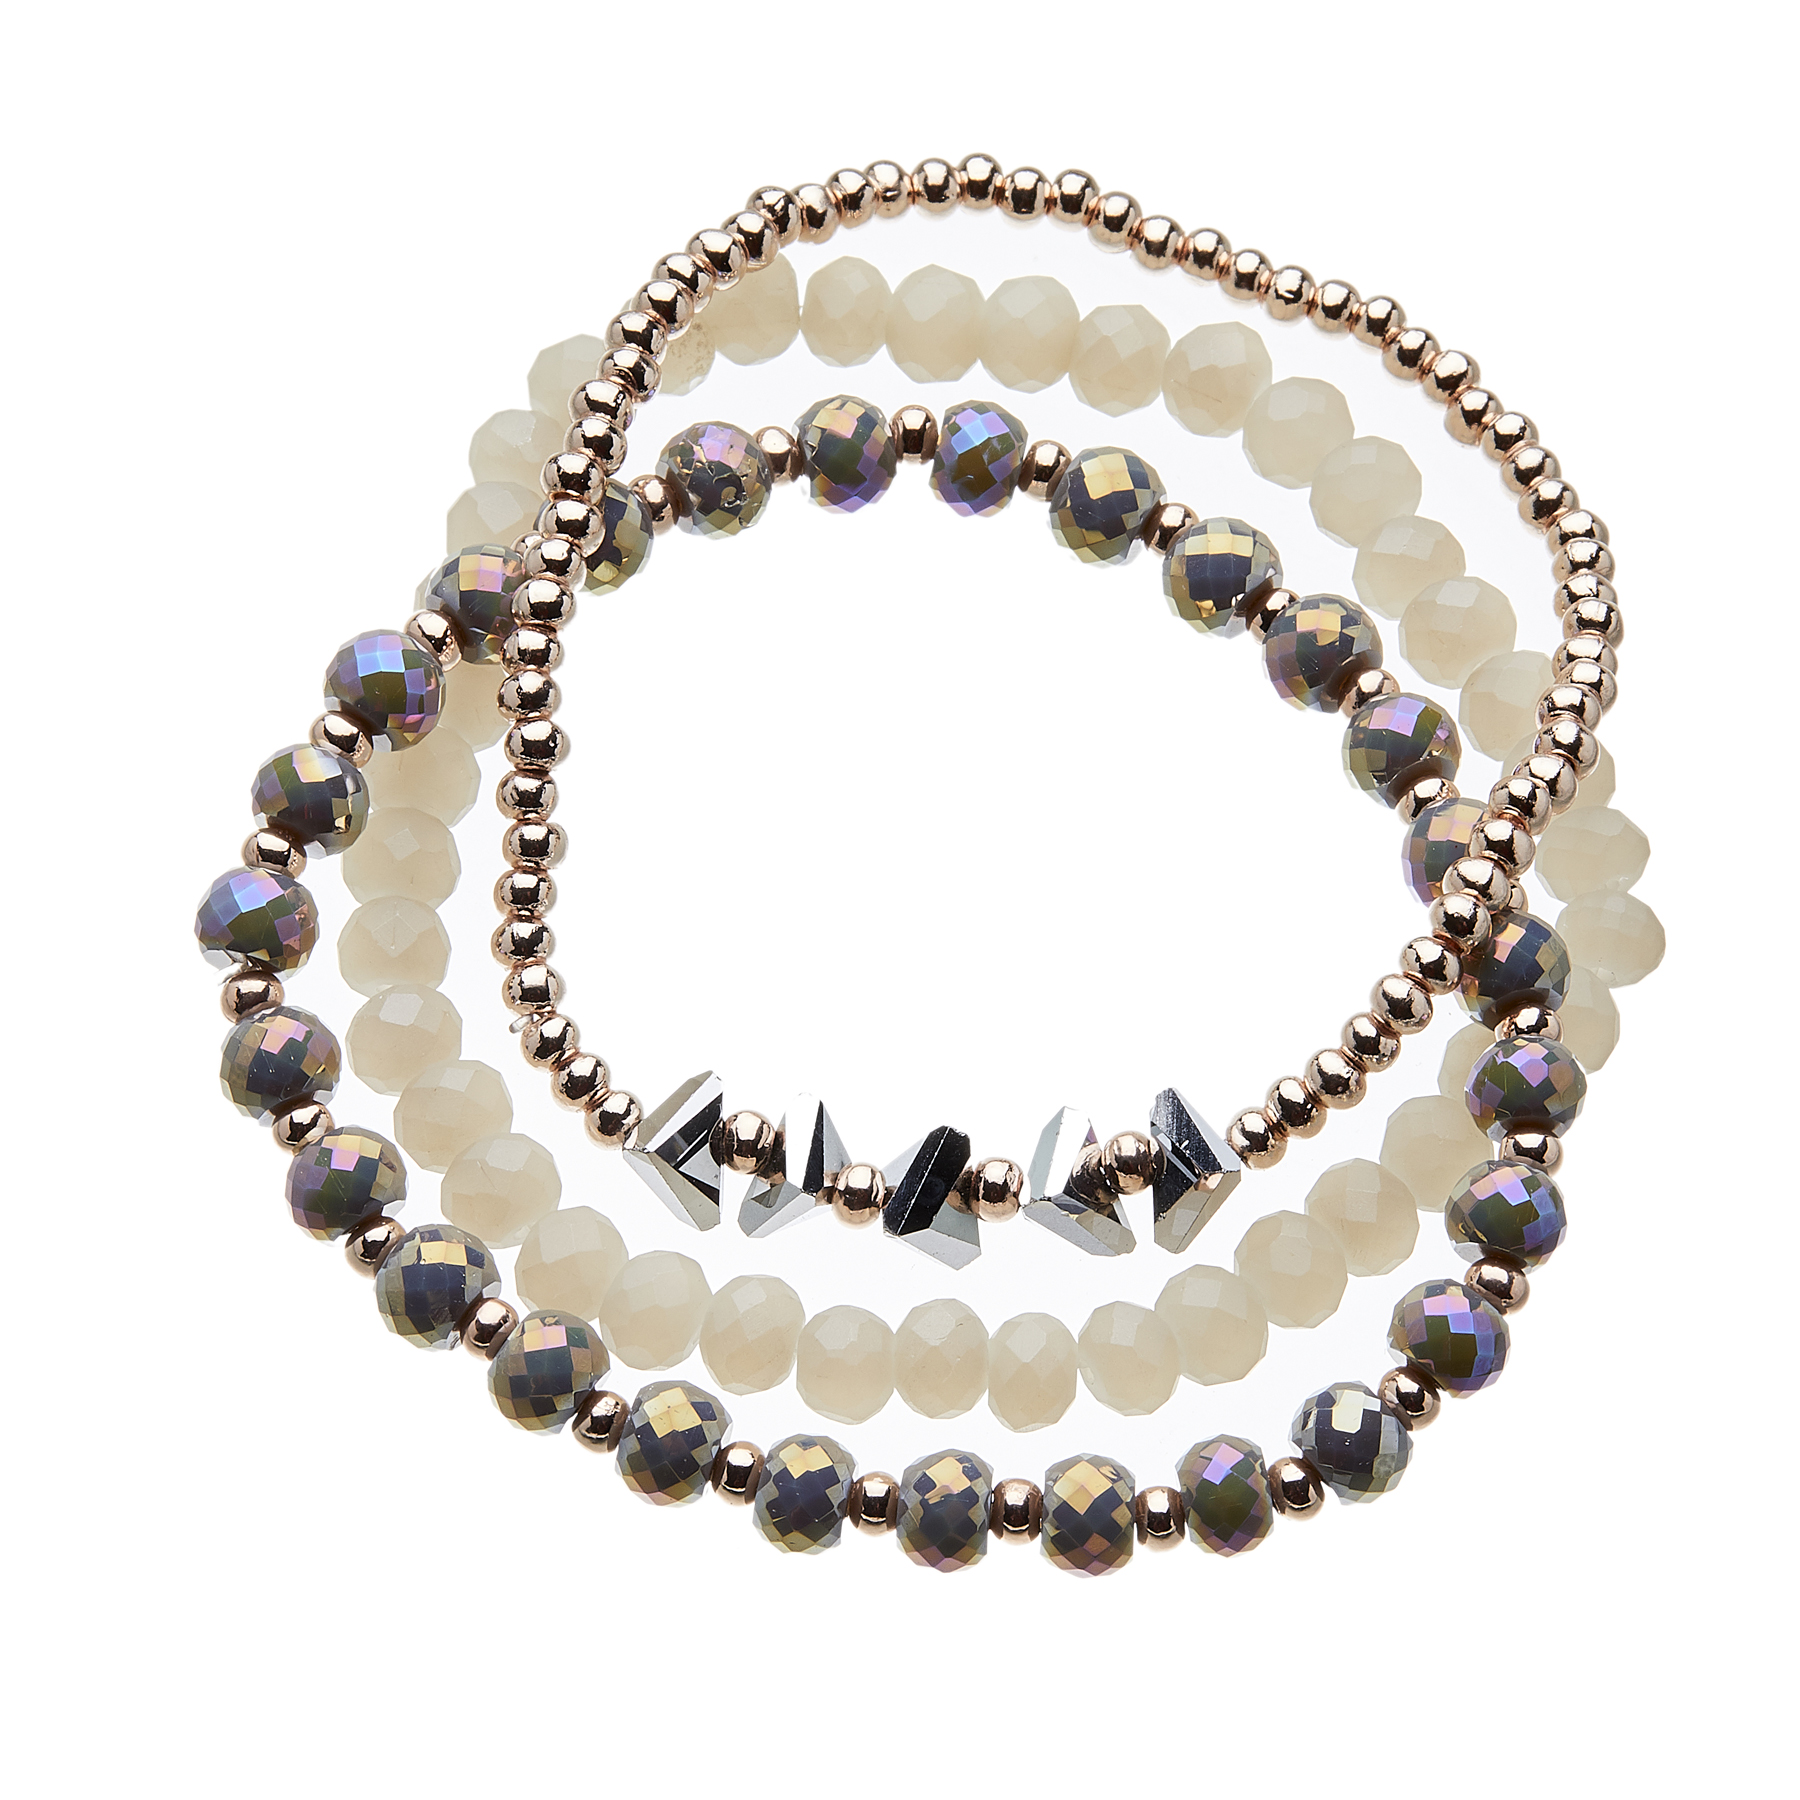 Three Bracelets with grey and champagne gold beads - Yori G14-13-10